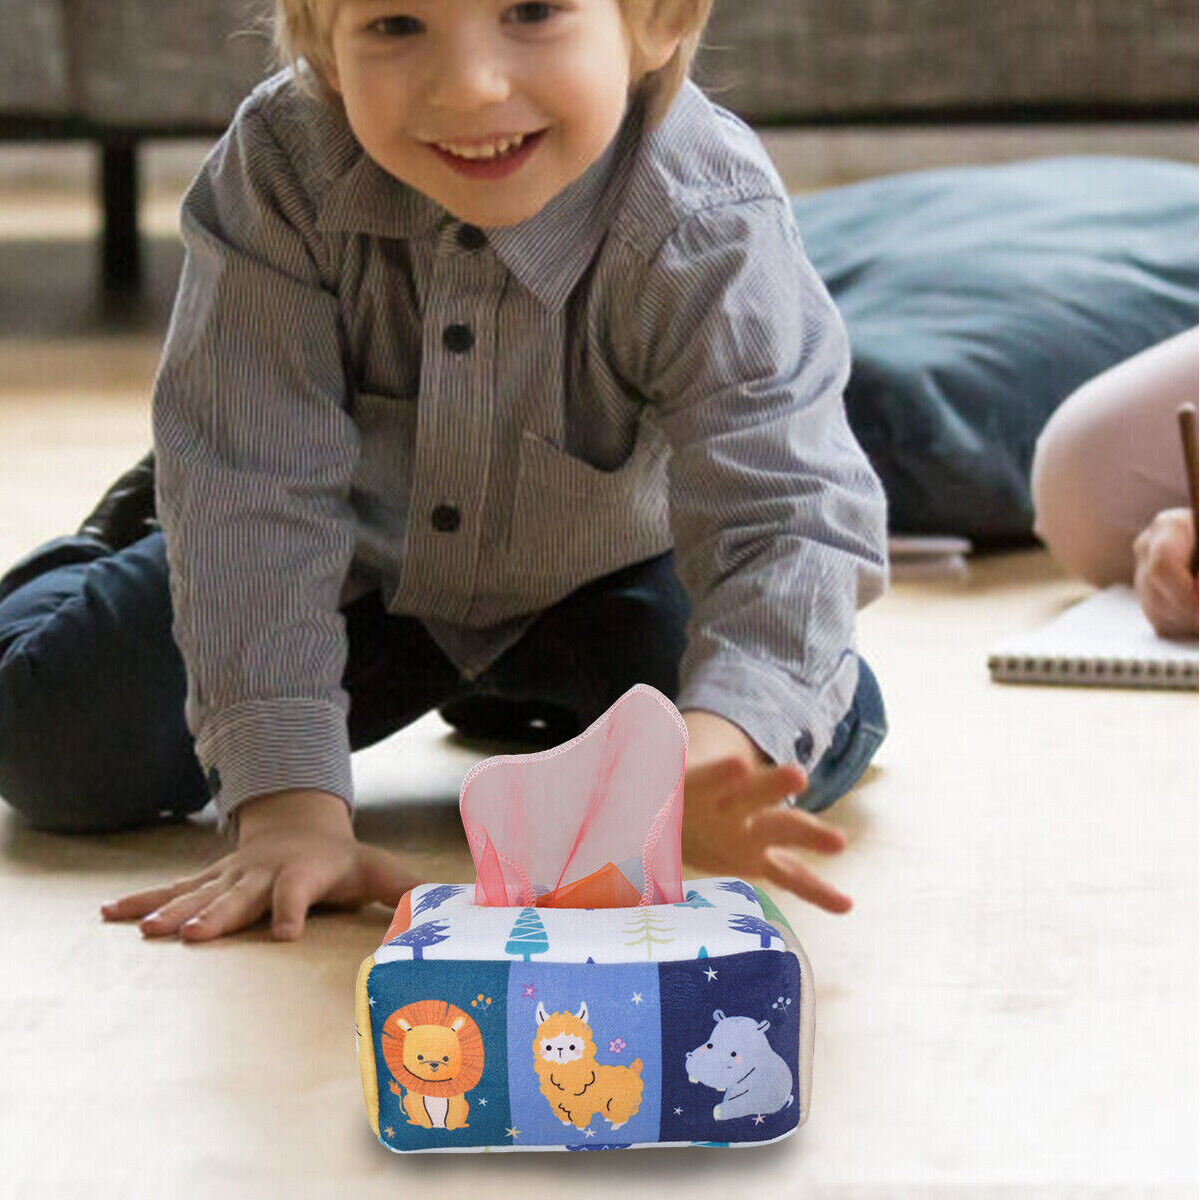 Montessori Toys Magic Tissue Box